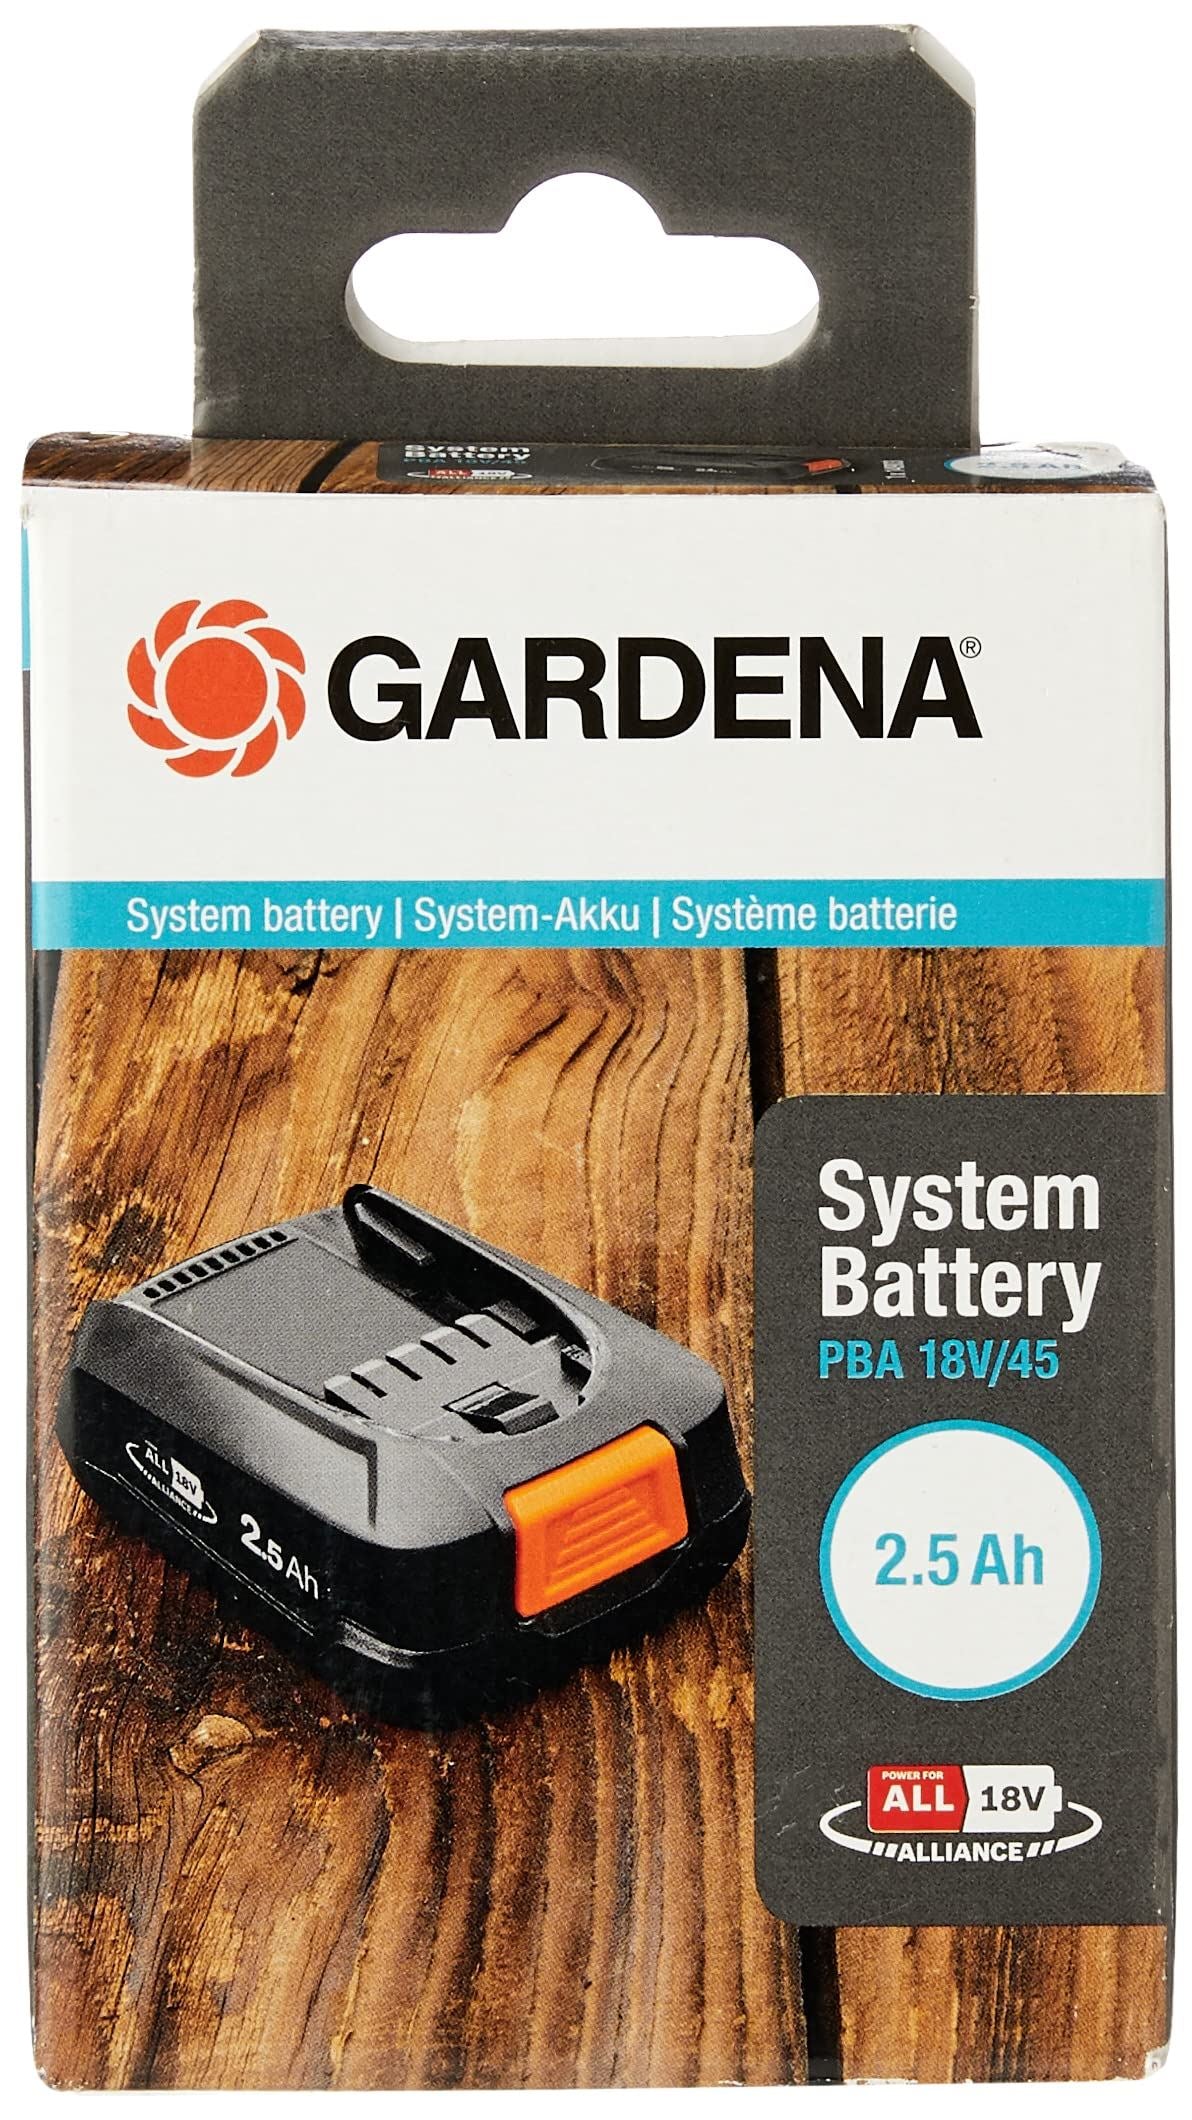 Gardena P4A PBA 18V/45 2.5 Ah System Battery